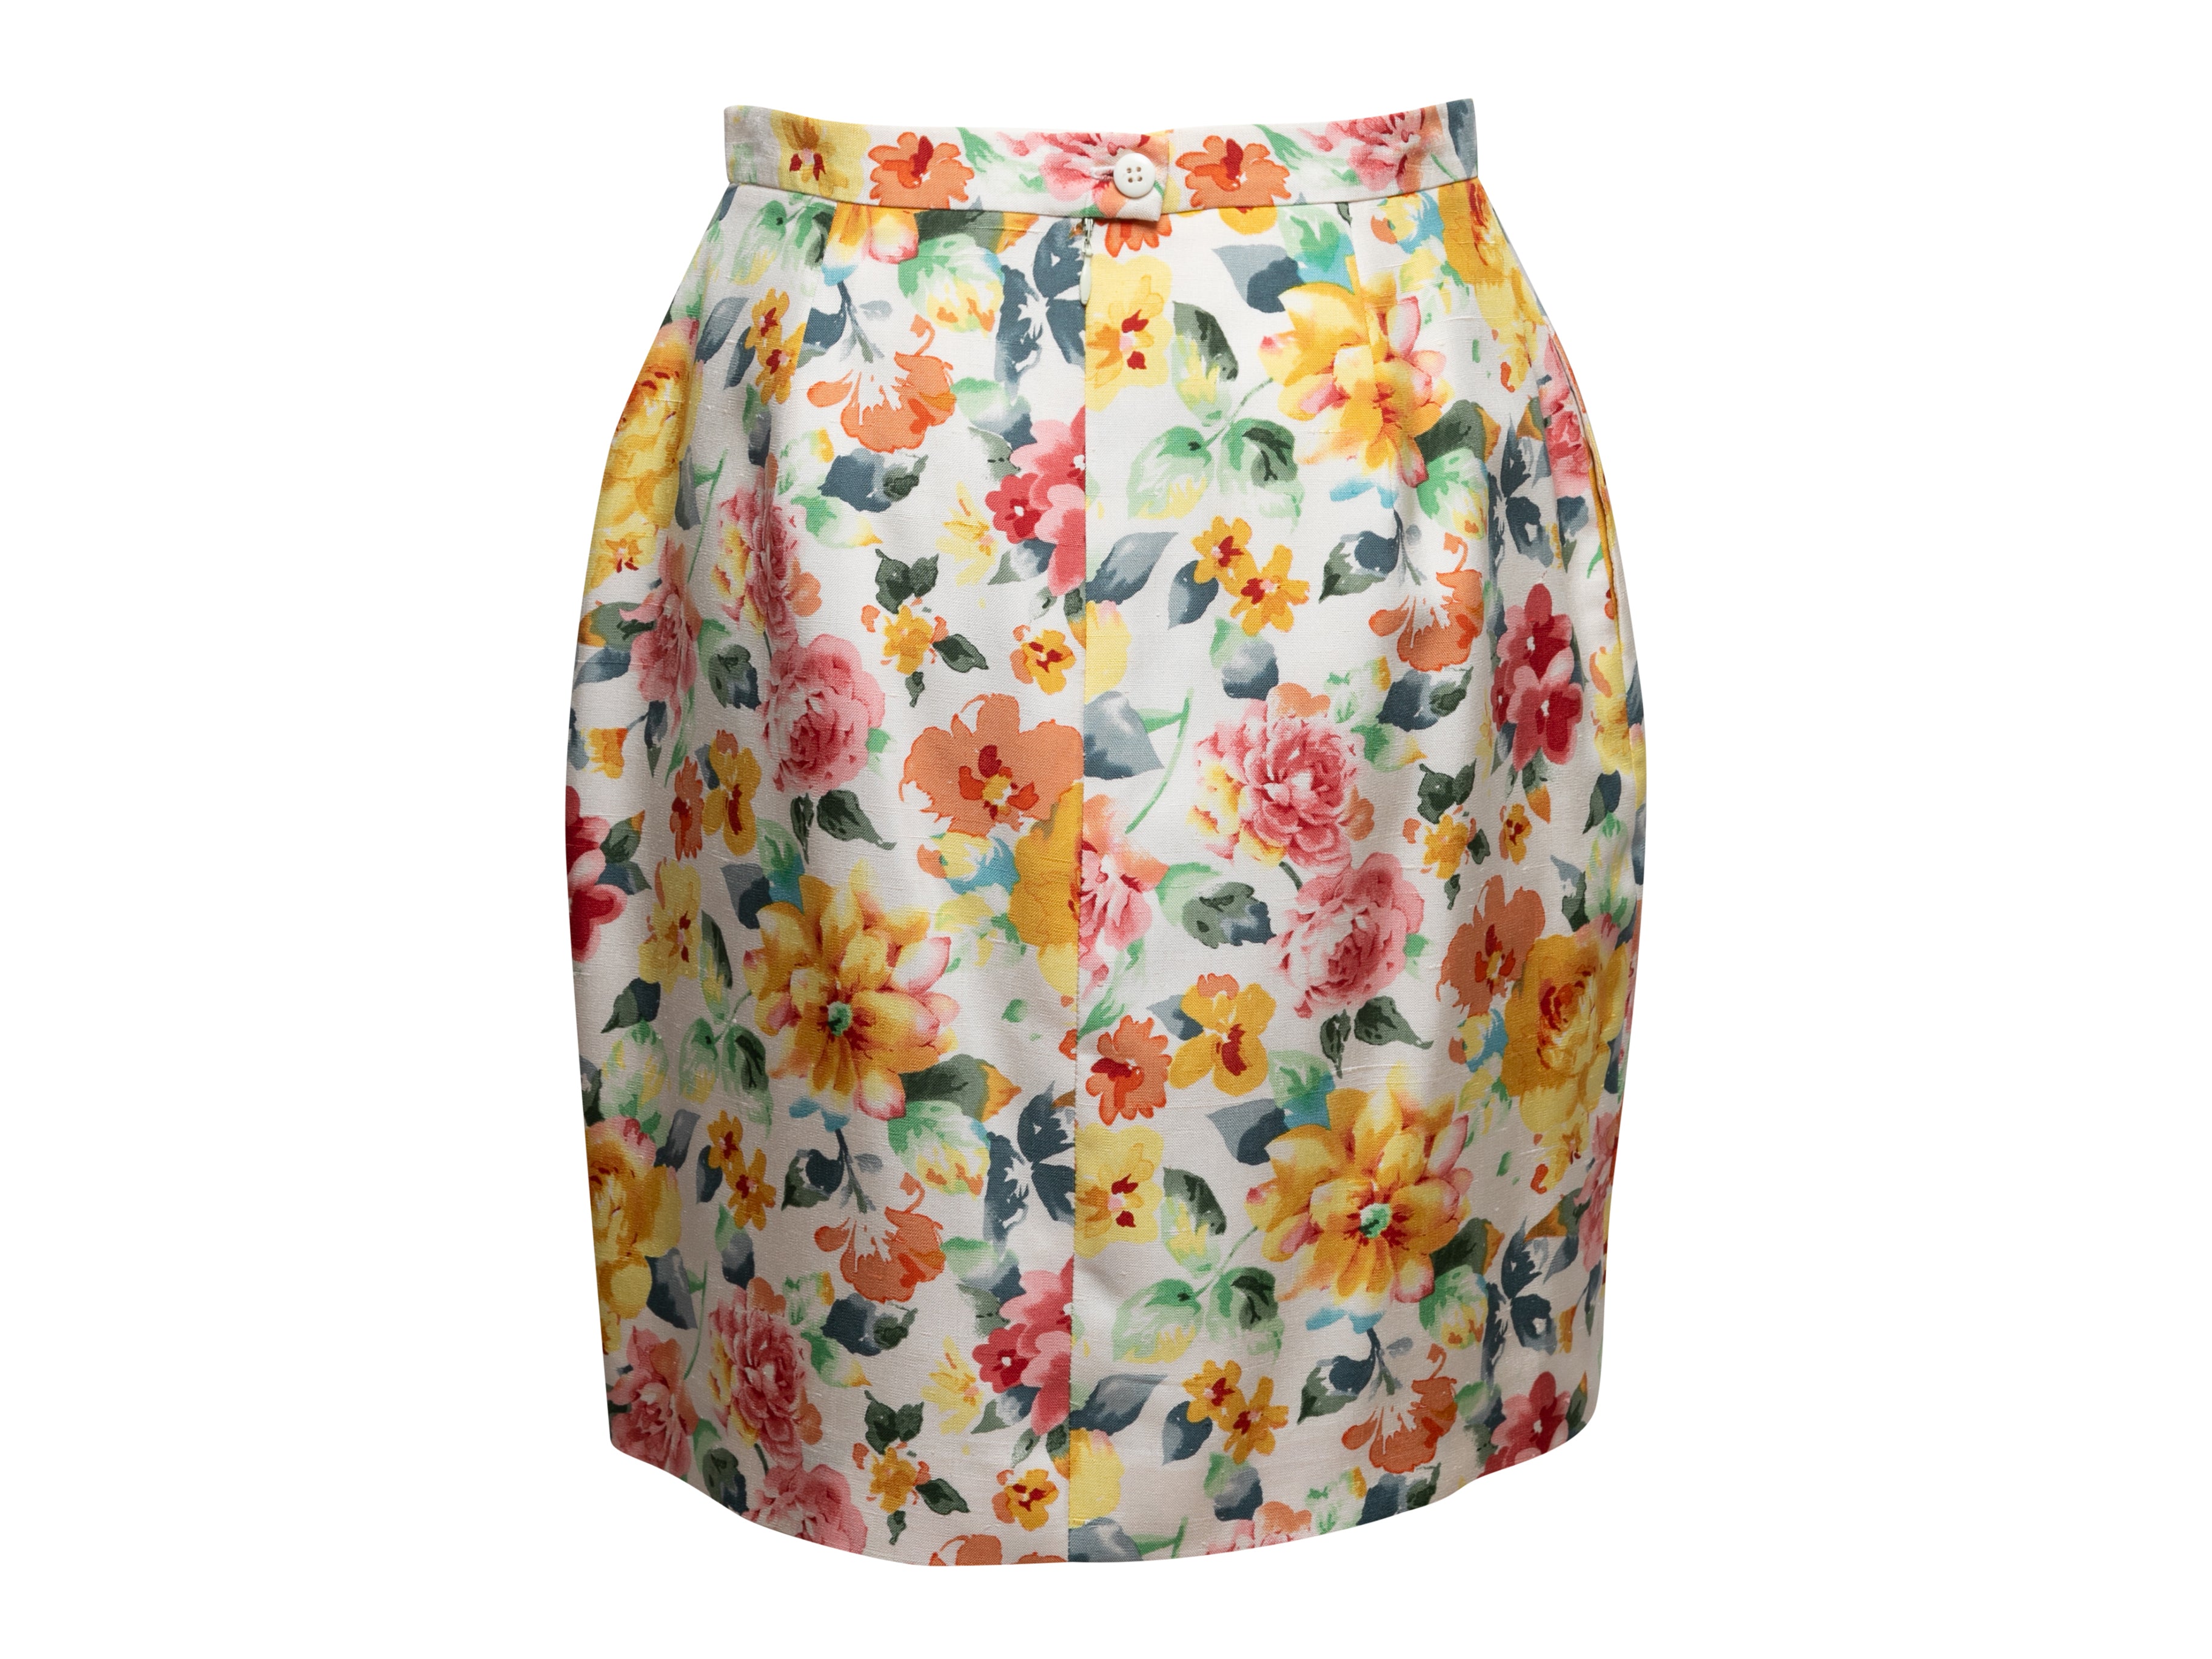 Multicolor Floral Print Skirt Size US 8